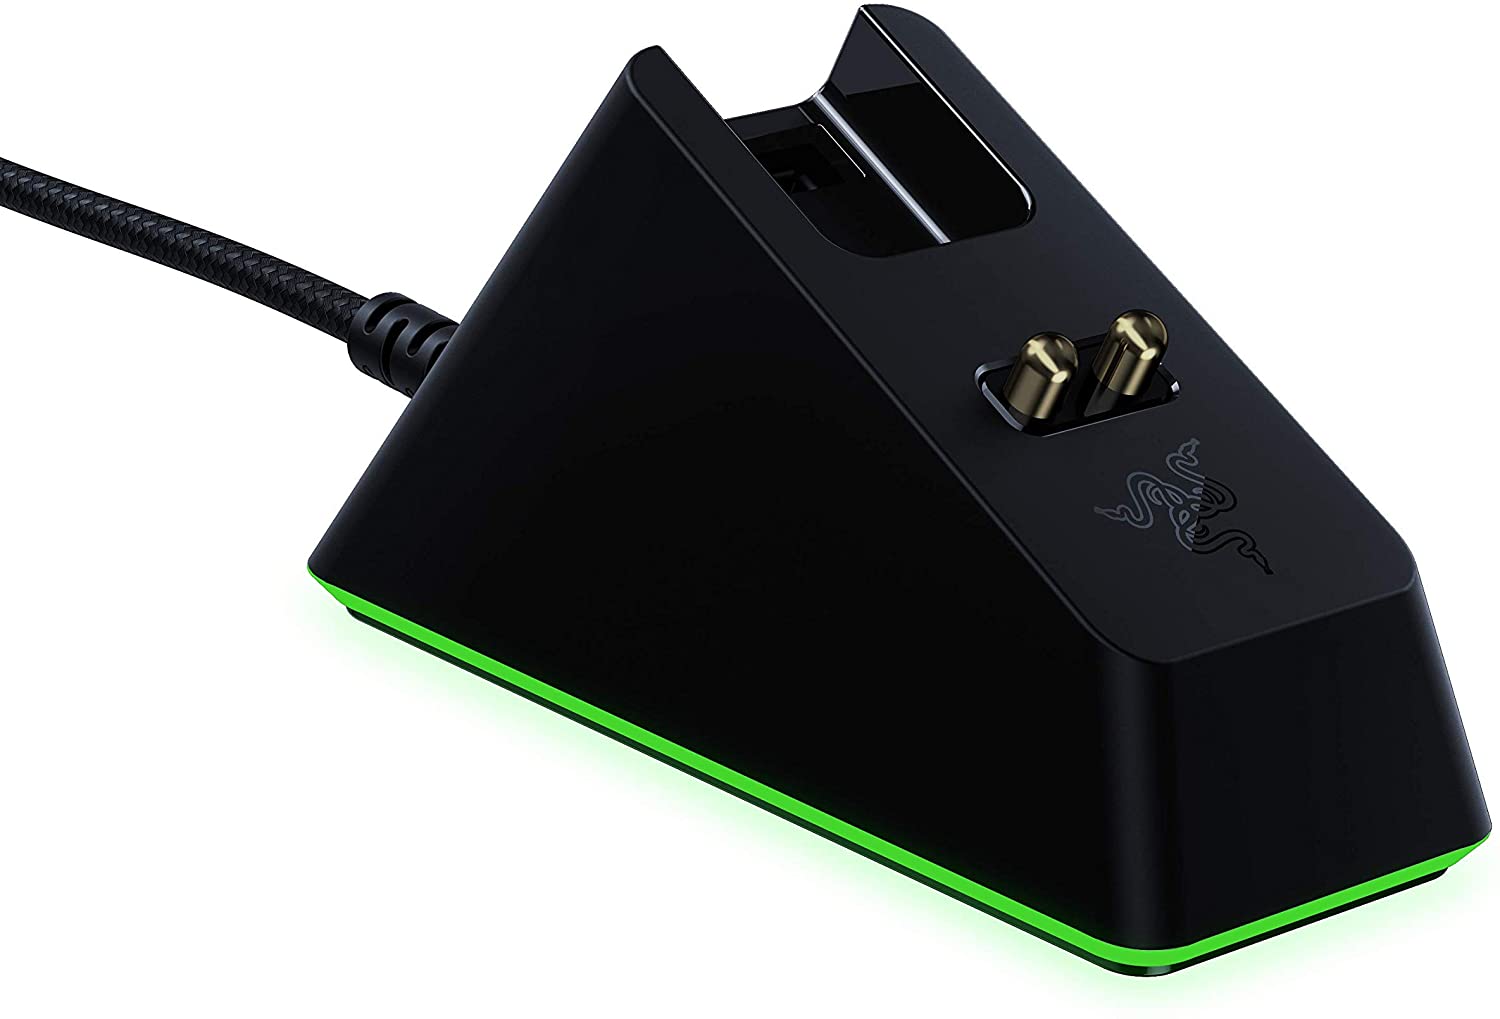 Razer Mouse Dock Chroma RGB Wireless Charging Dock